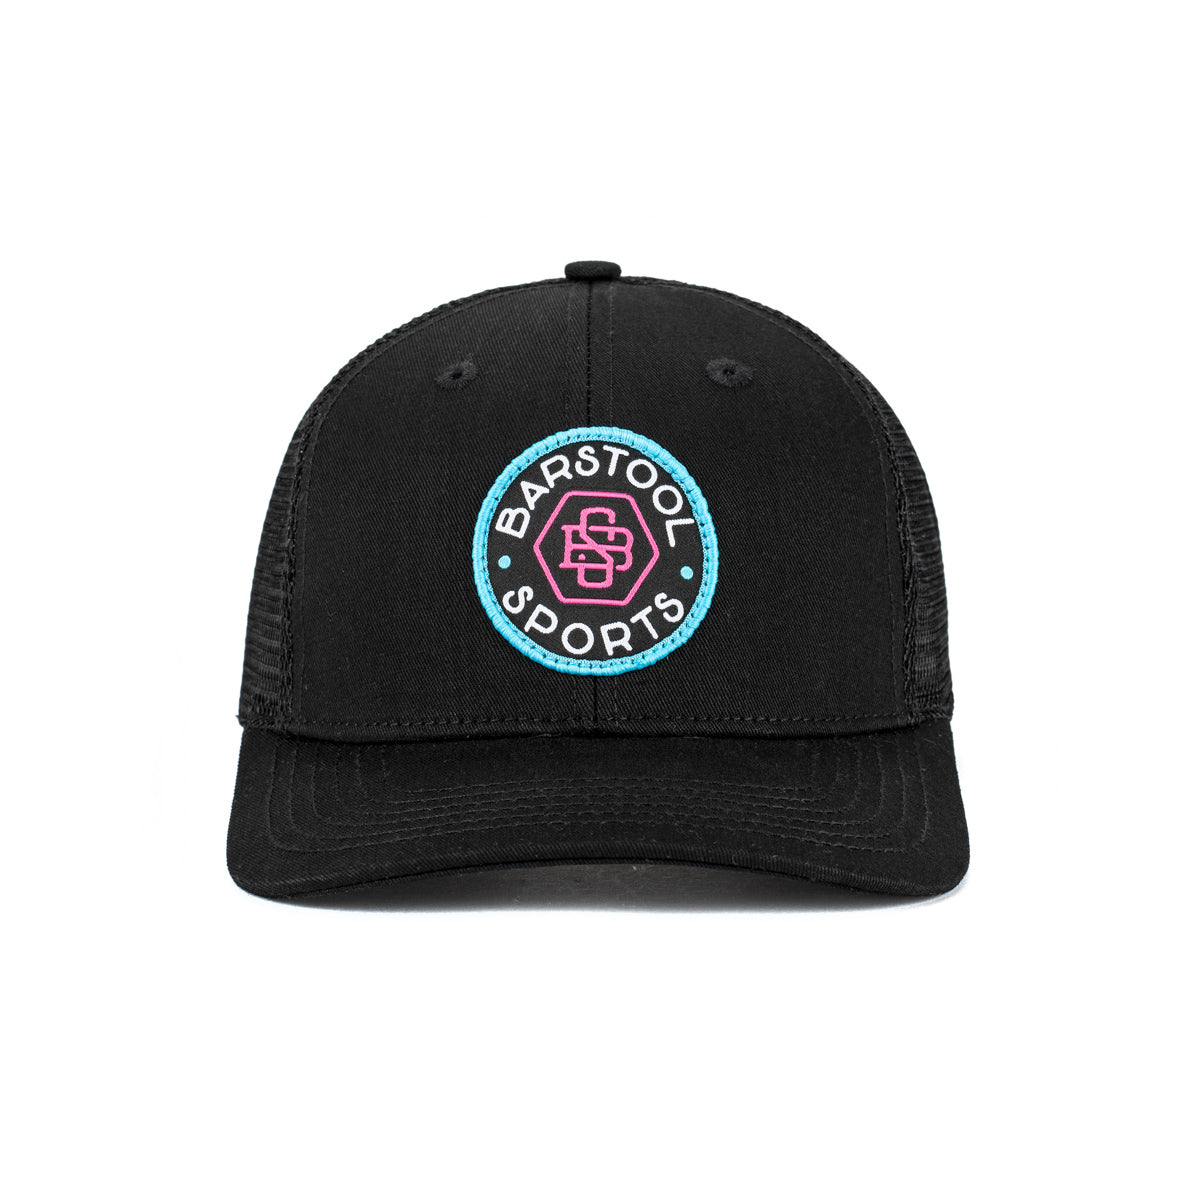 Barstool Sports Retro Trucker Hat-Hats-Barstool Sports-Black-One Size-Barstool Sports